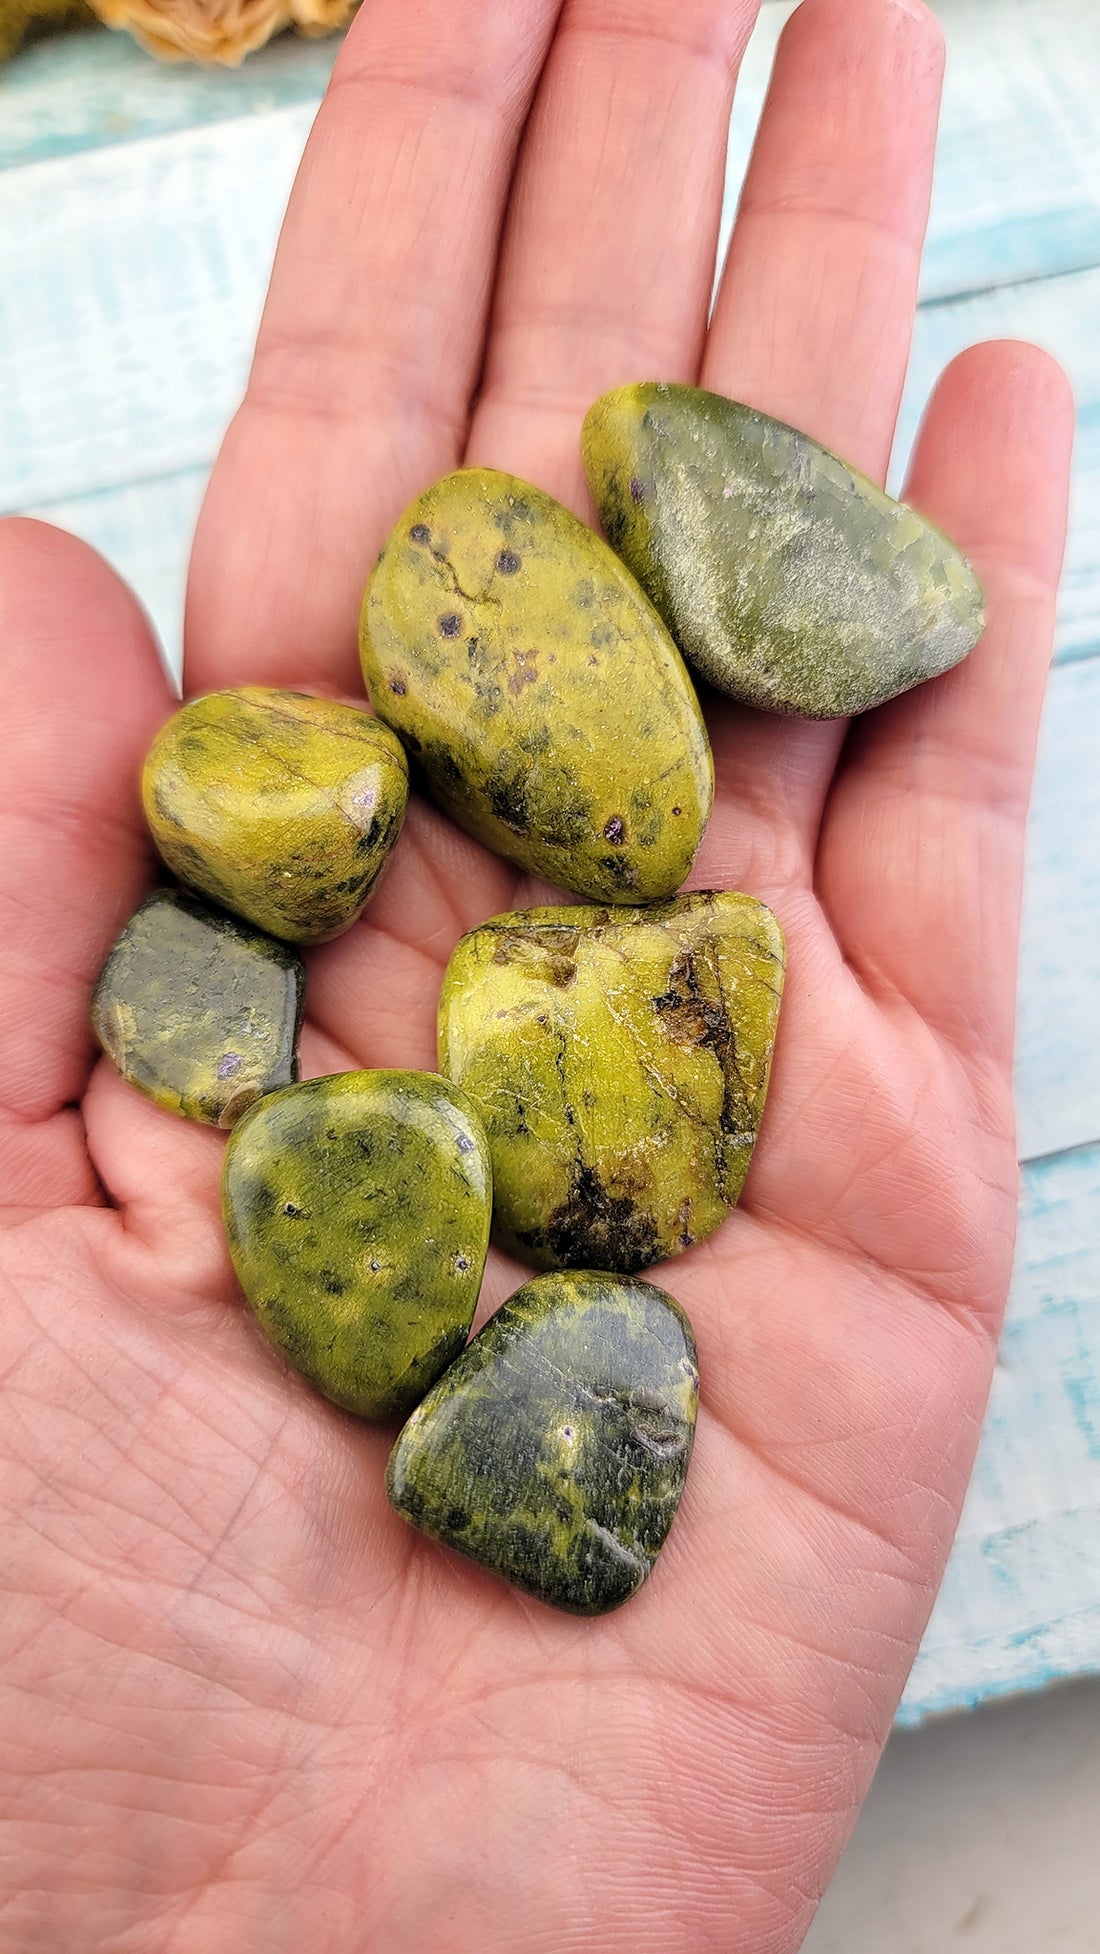 tumbled stitchtite in serpentine stones in hand